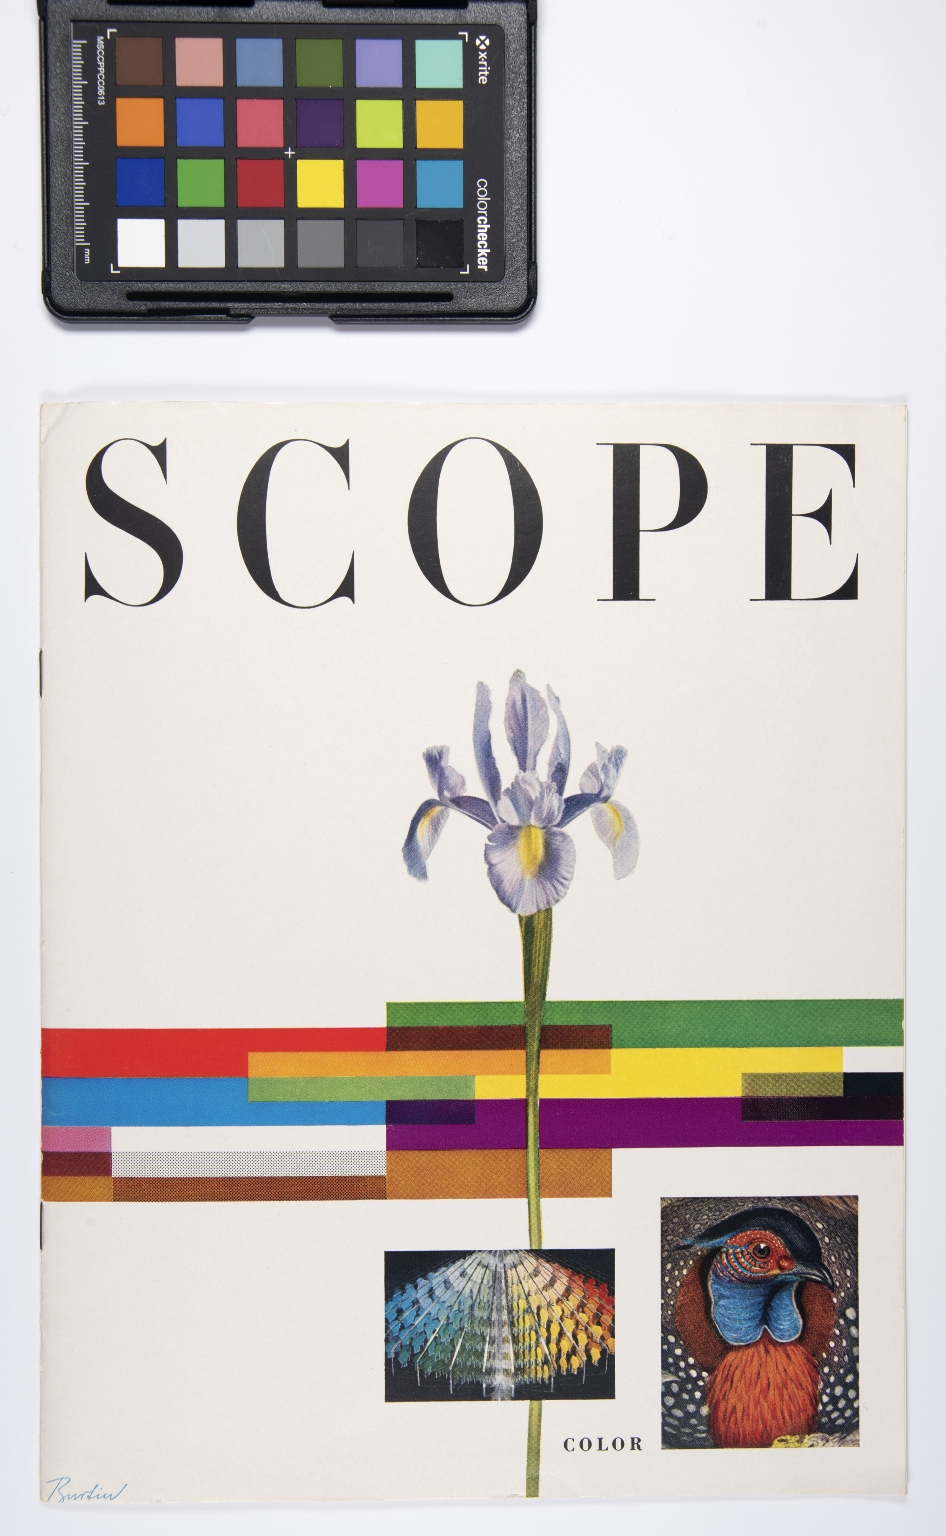 Scope, Volume IV, Number 1